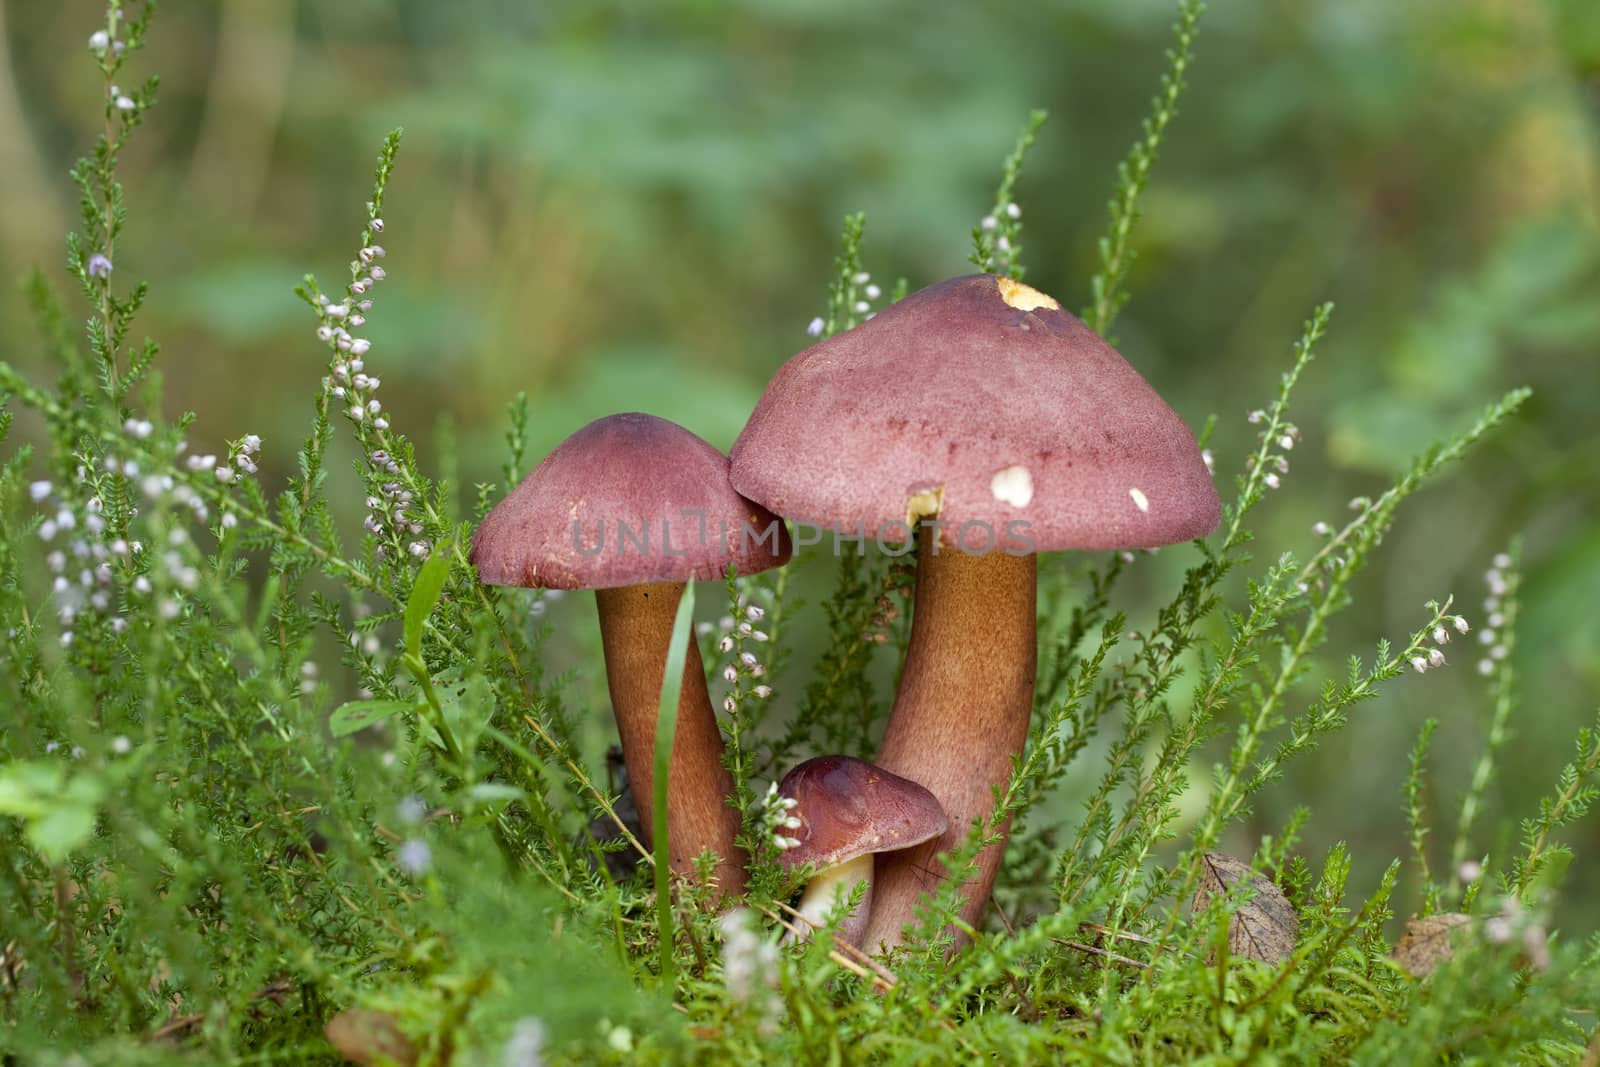 edible mushrooms (Tricholomopsis rutilans) in forest